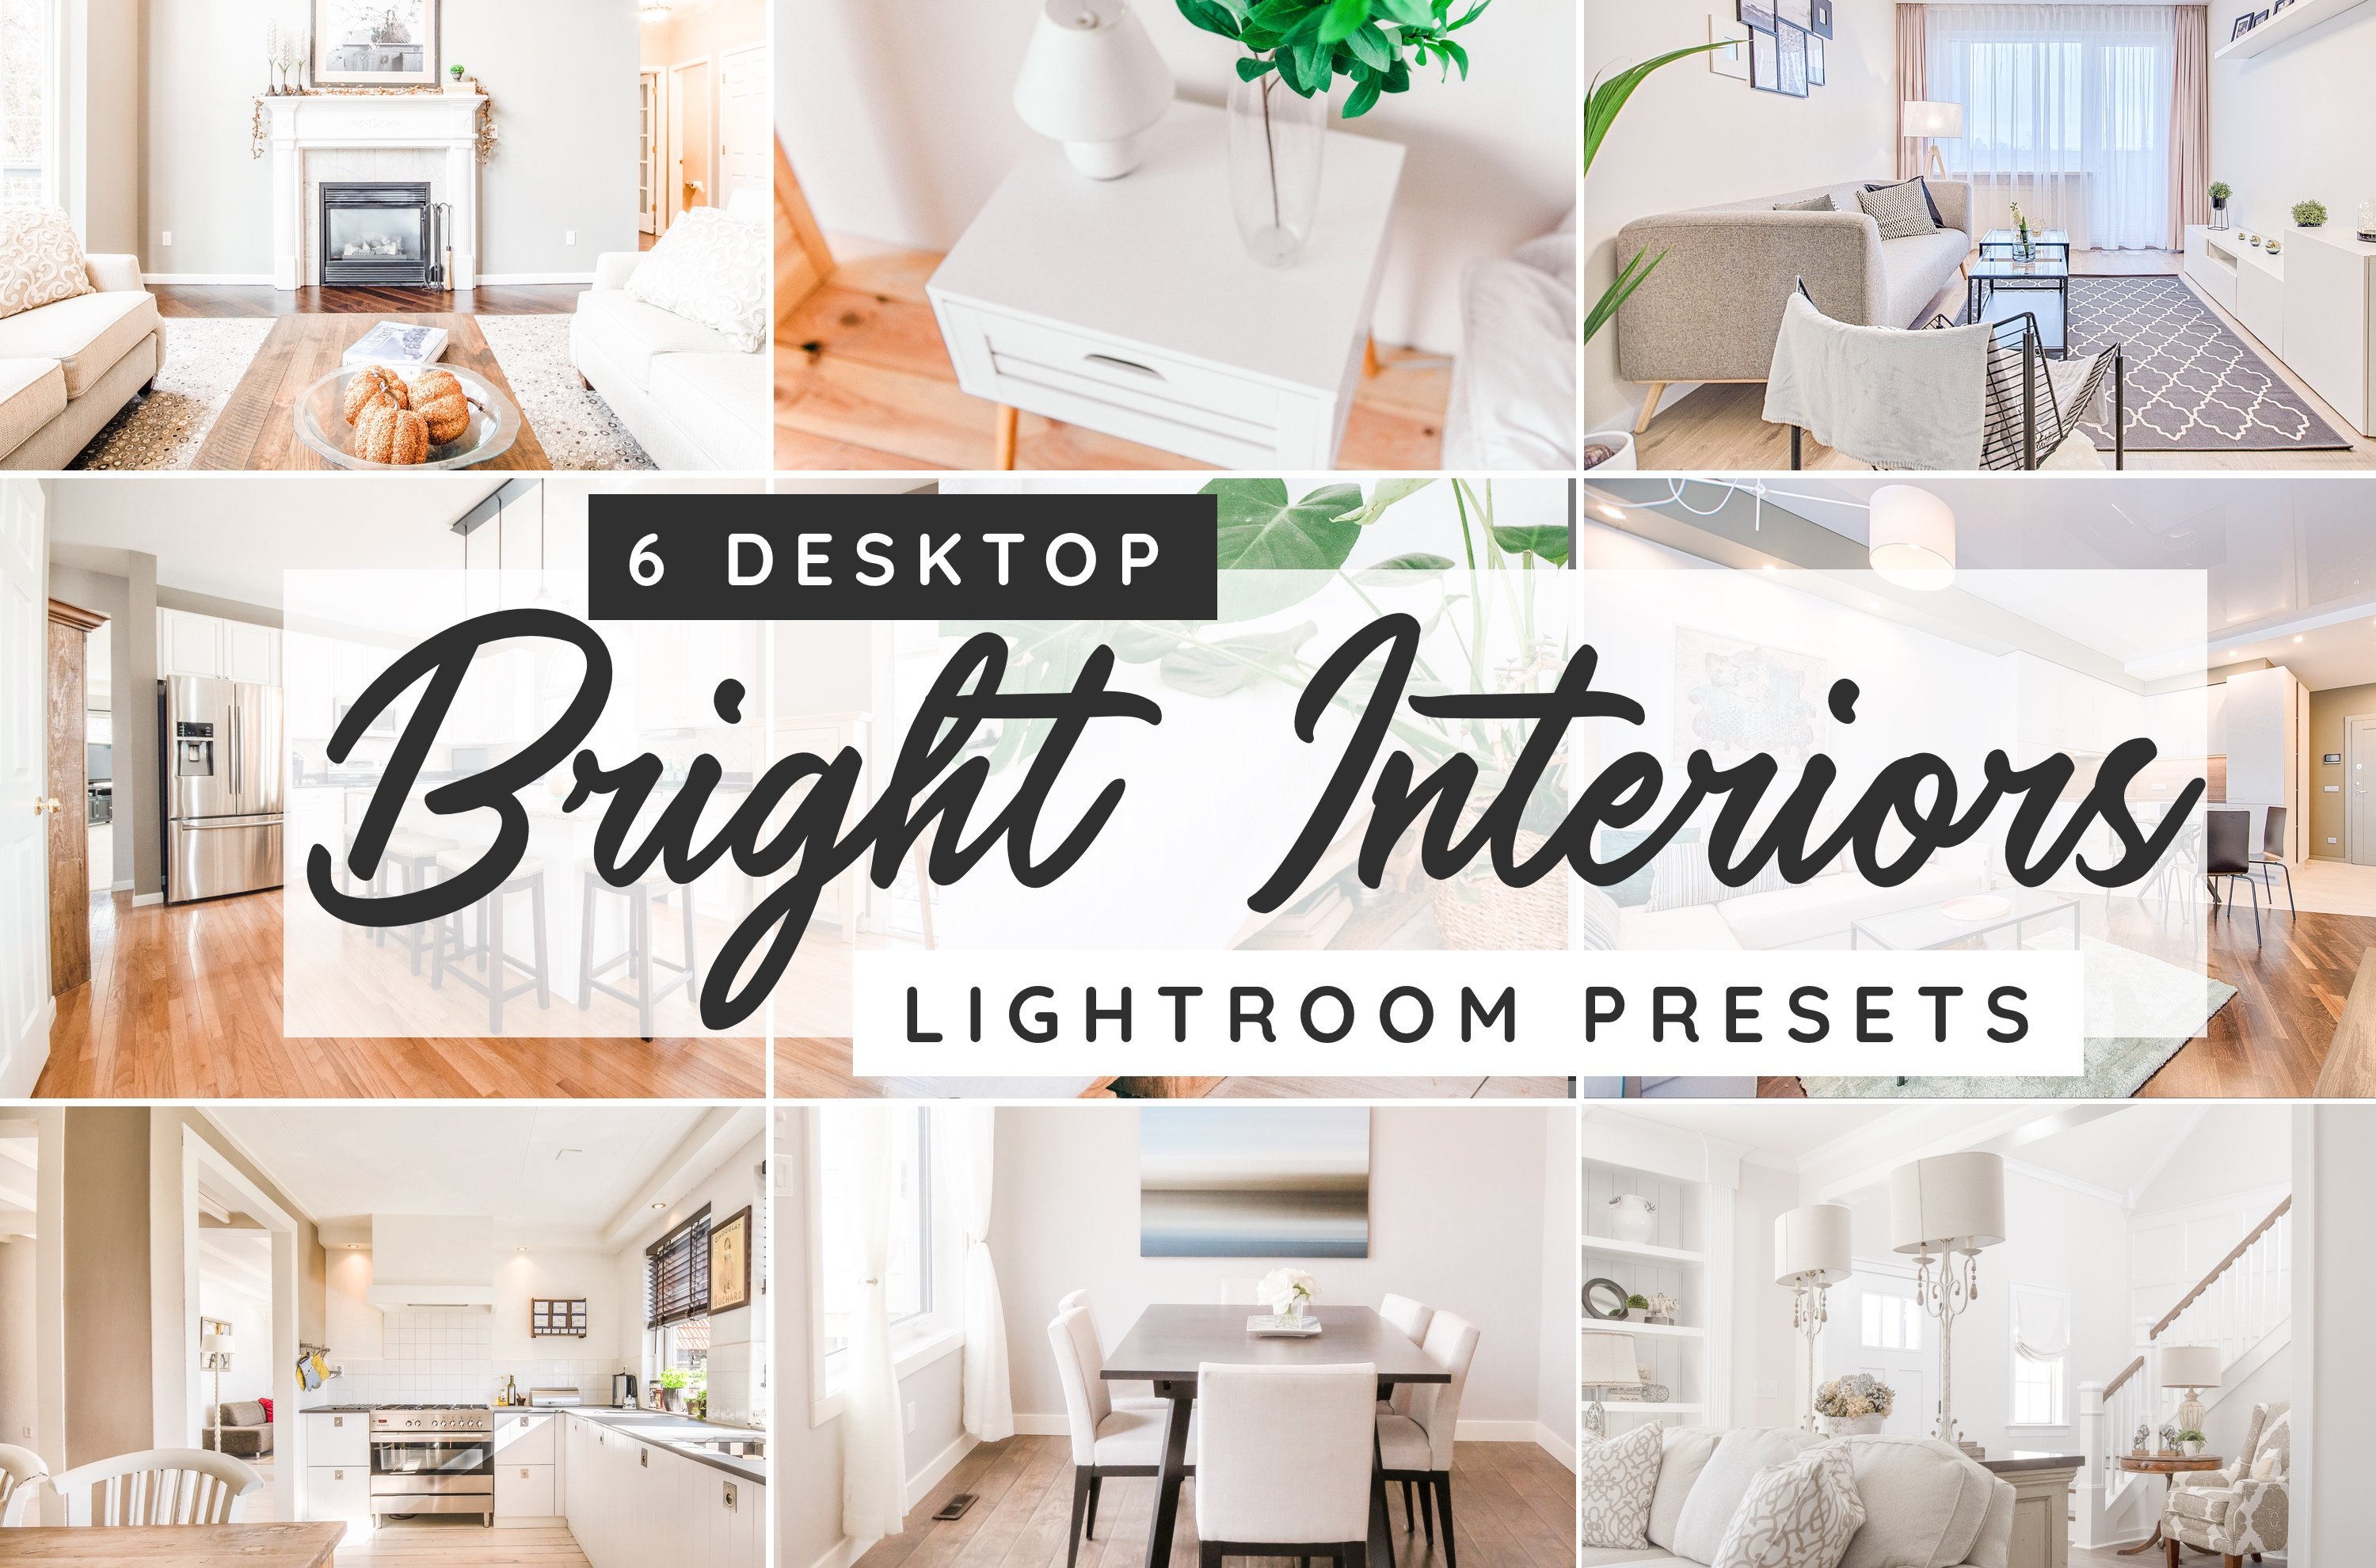 Bright interiors desktop presetscover image.